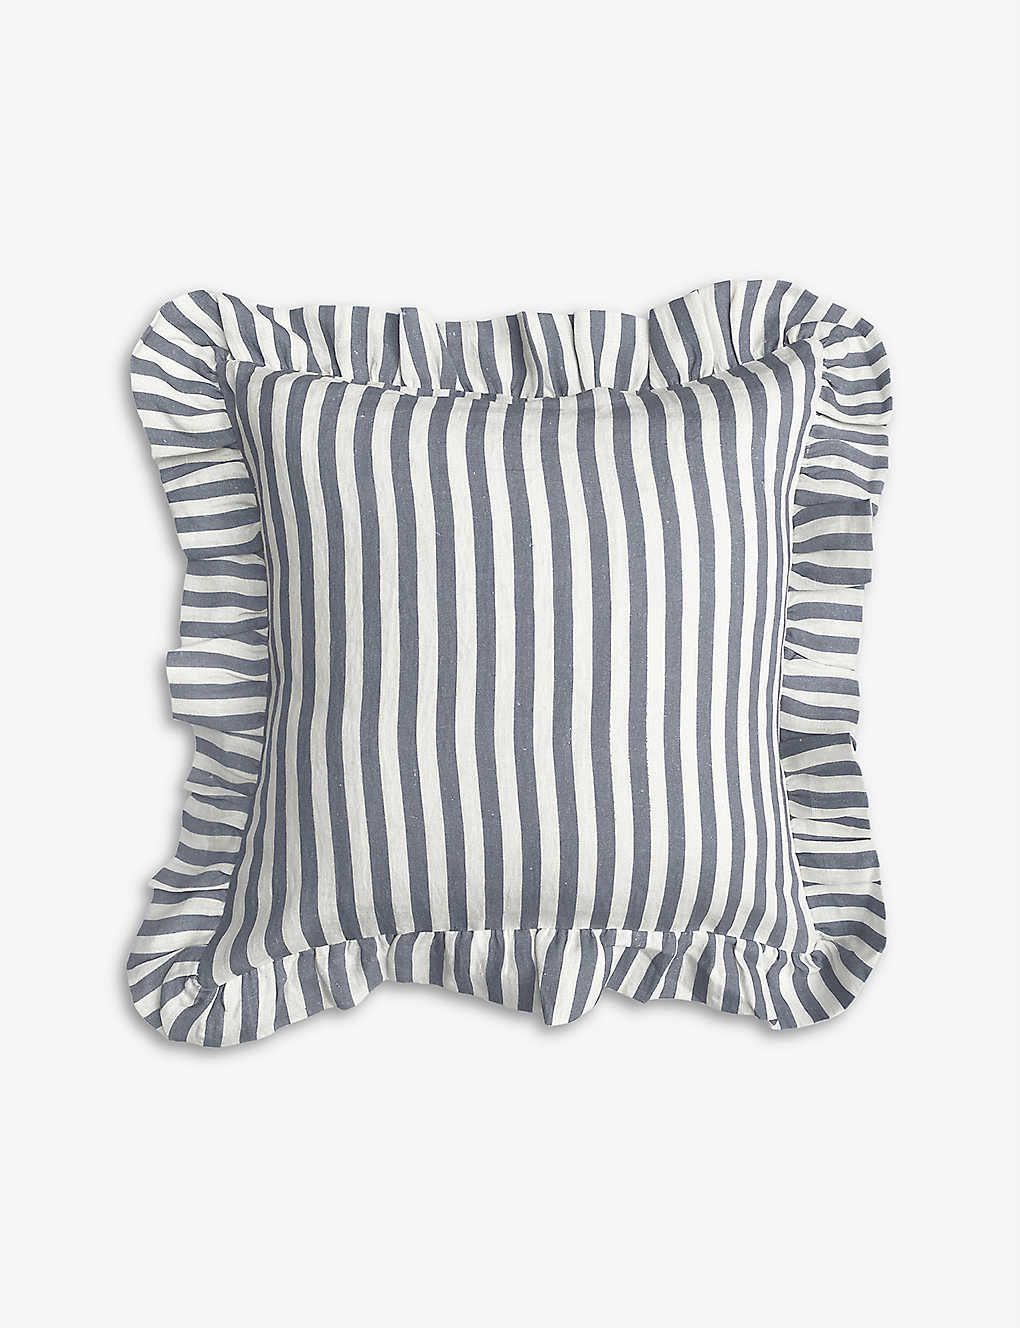 Stripe-print scalloped-edge linen cushion cover 45cm x 45cm | Selfridges